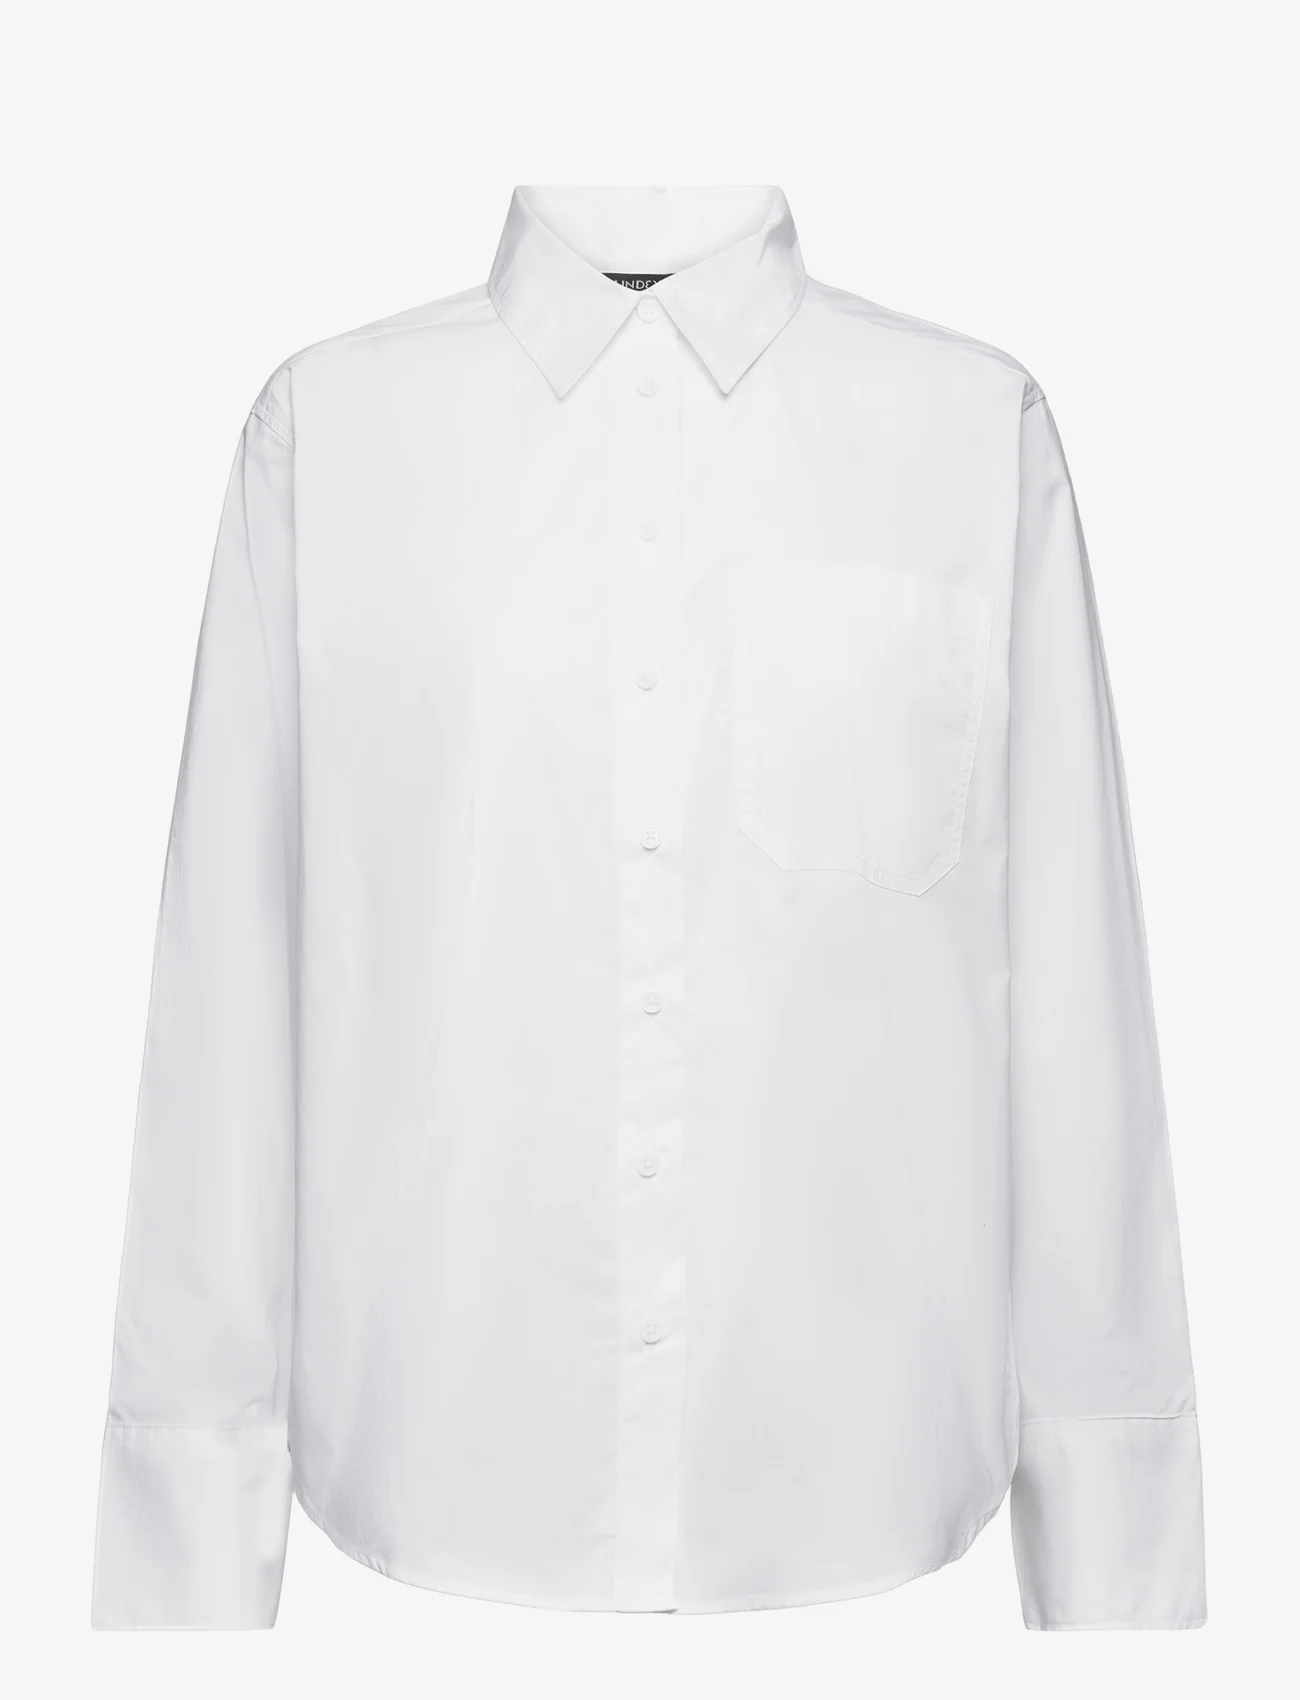 Lindex - Shirt April - långärmade skjortor - white - 0